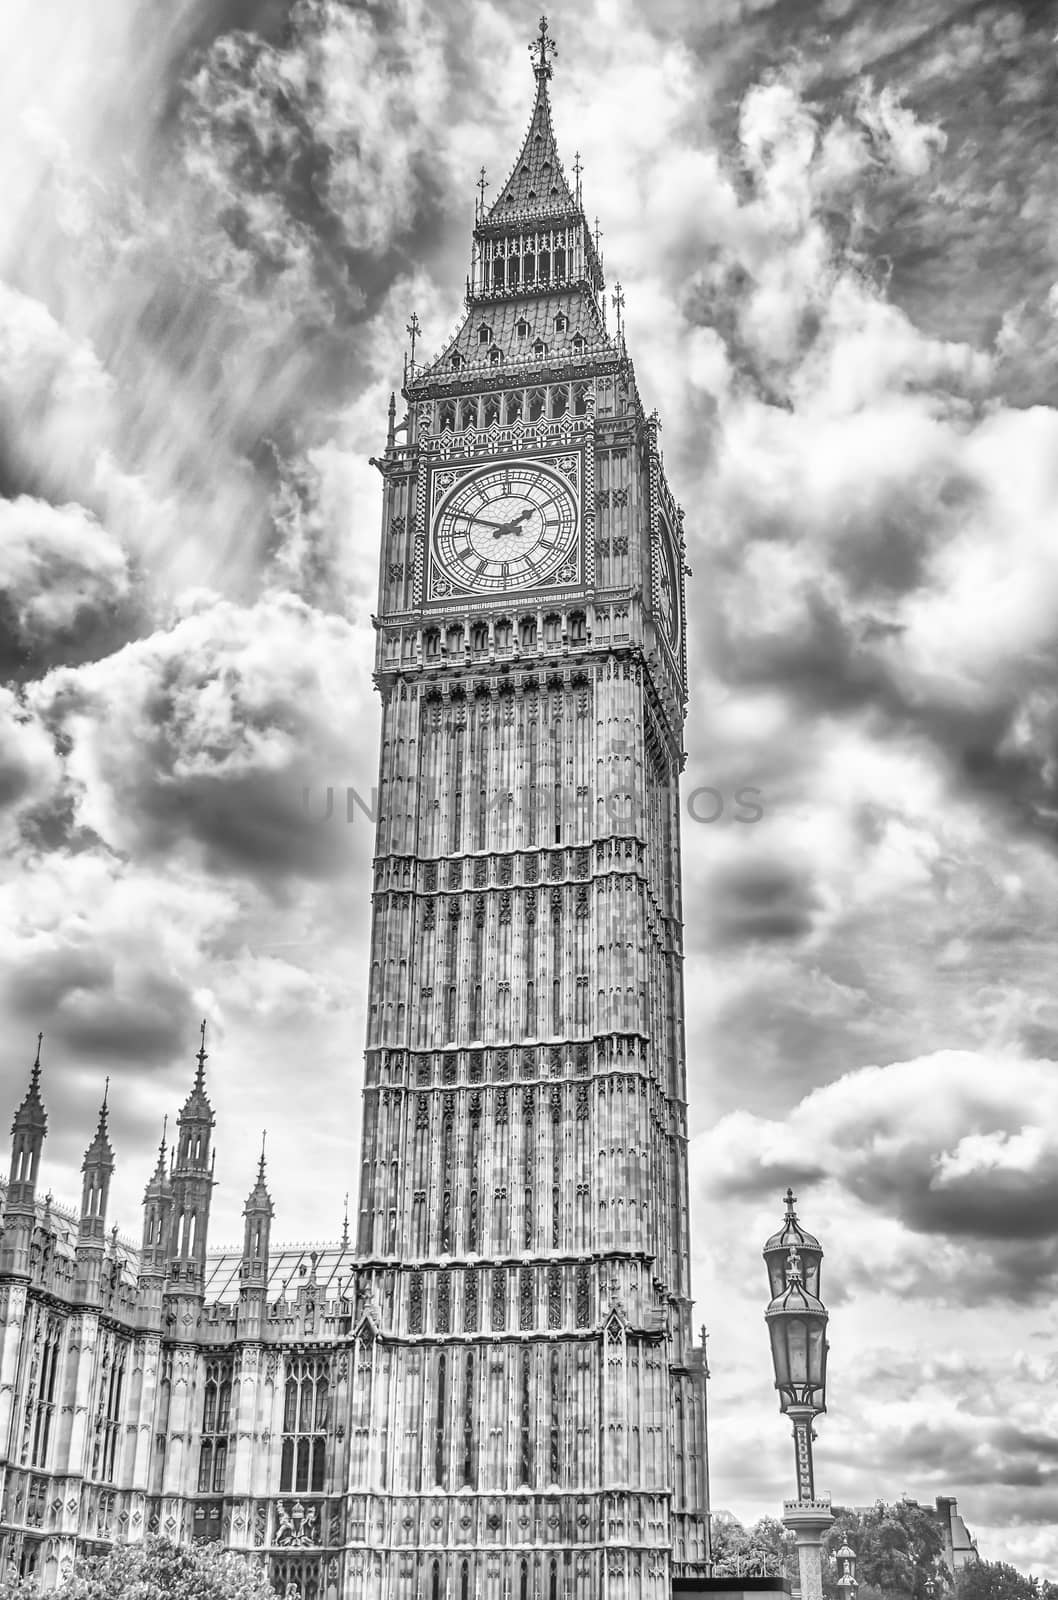 The Big Ben, Houses of Parliament, London, UK